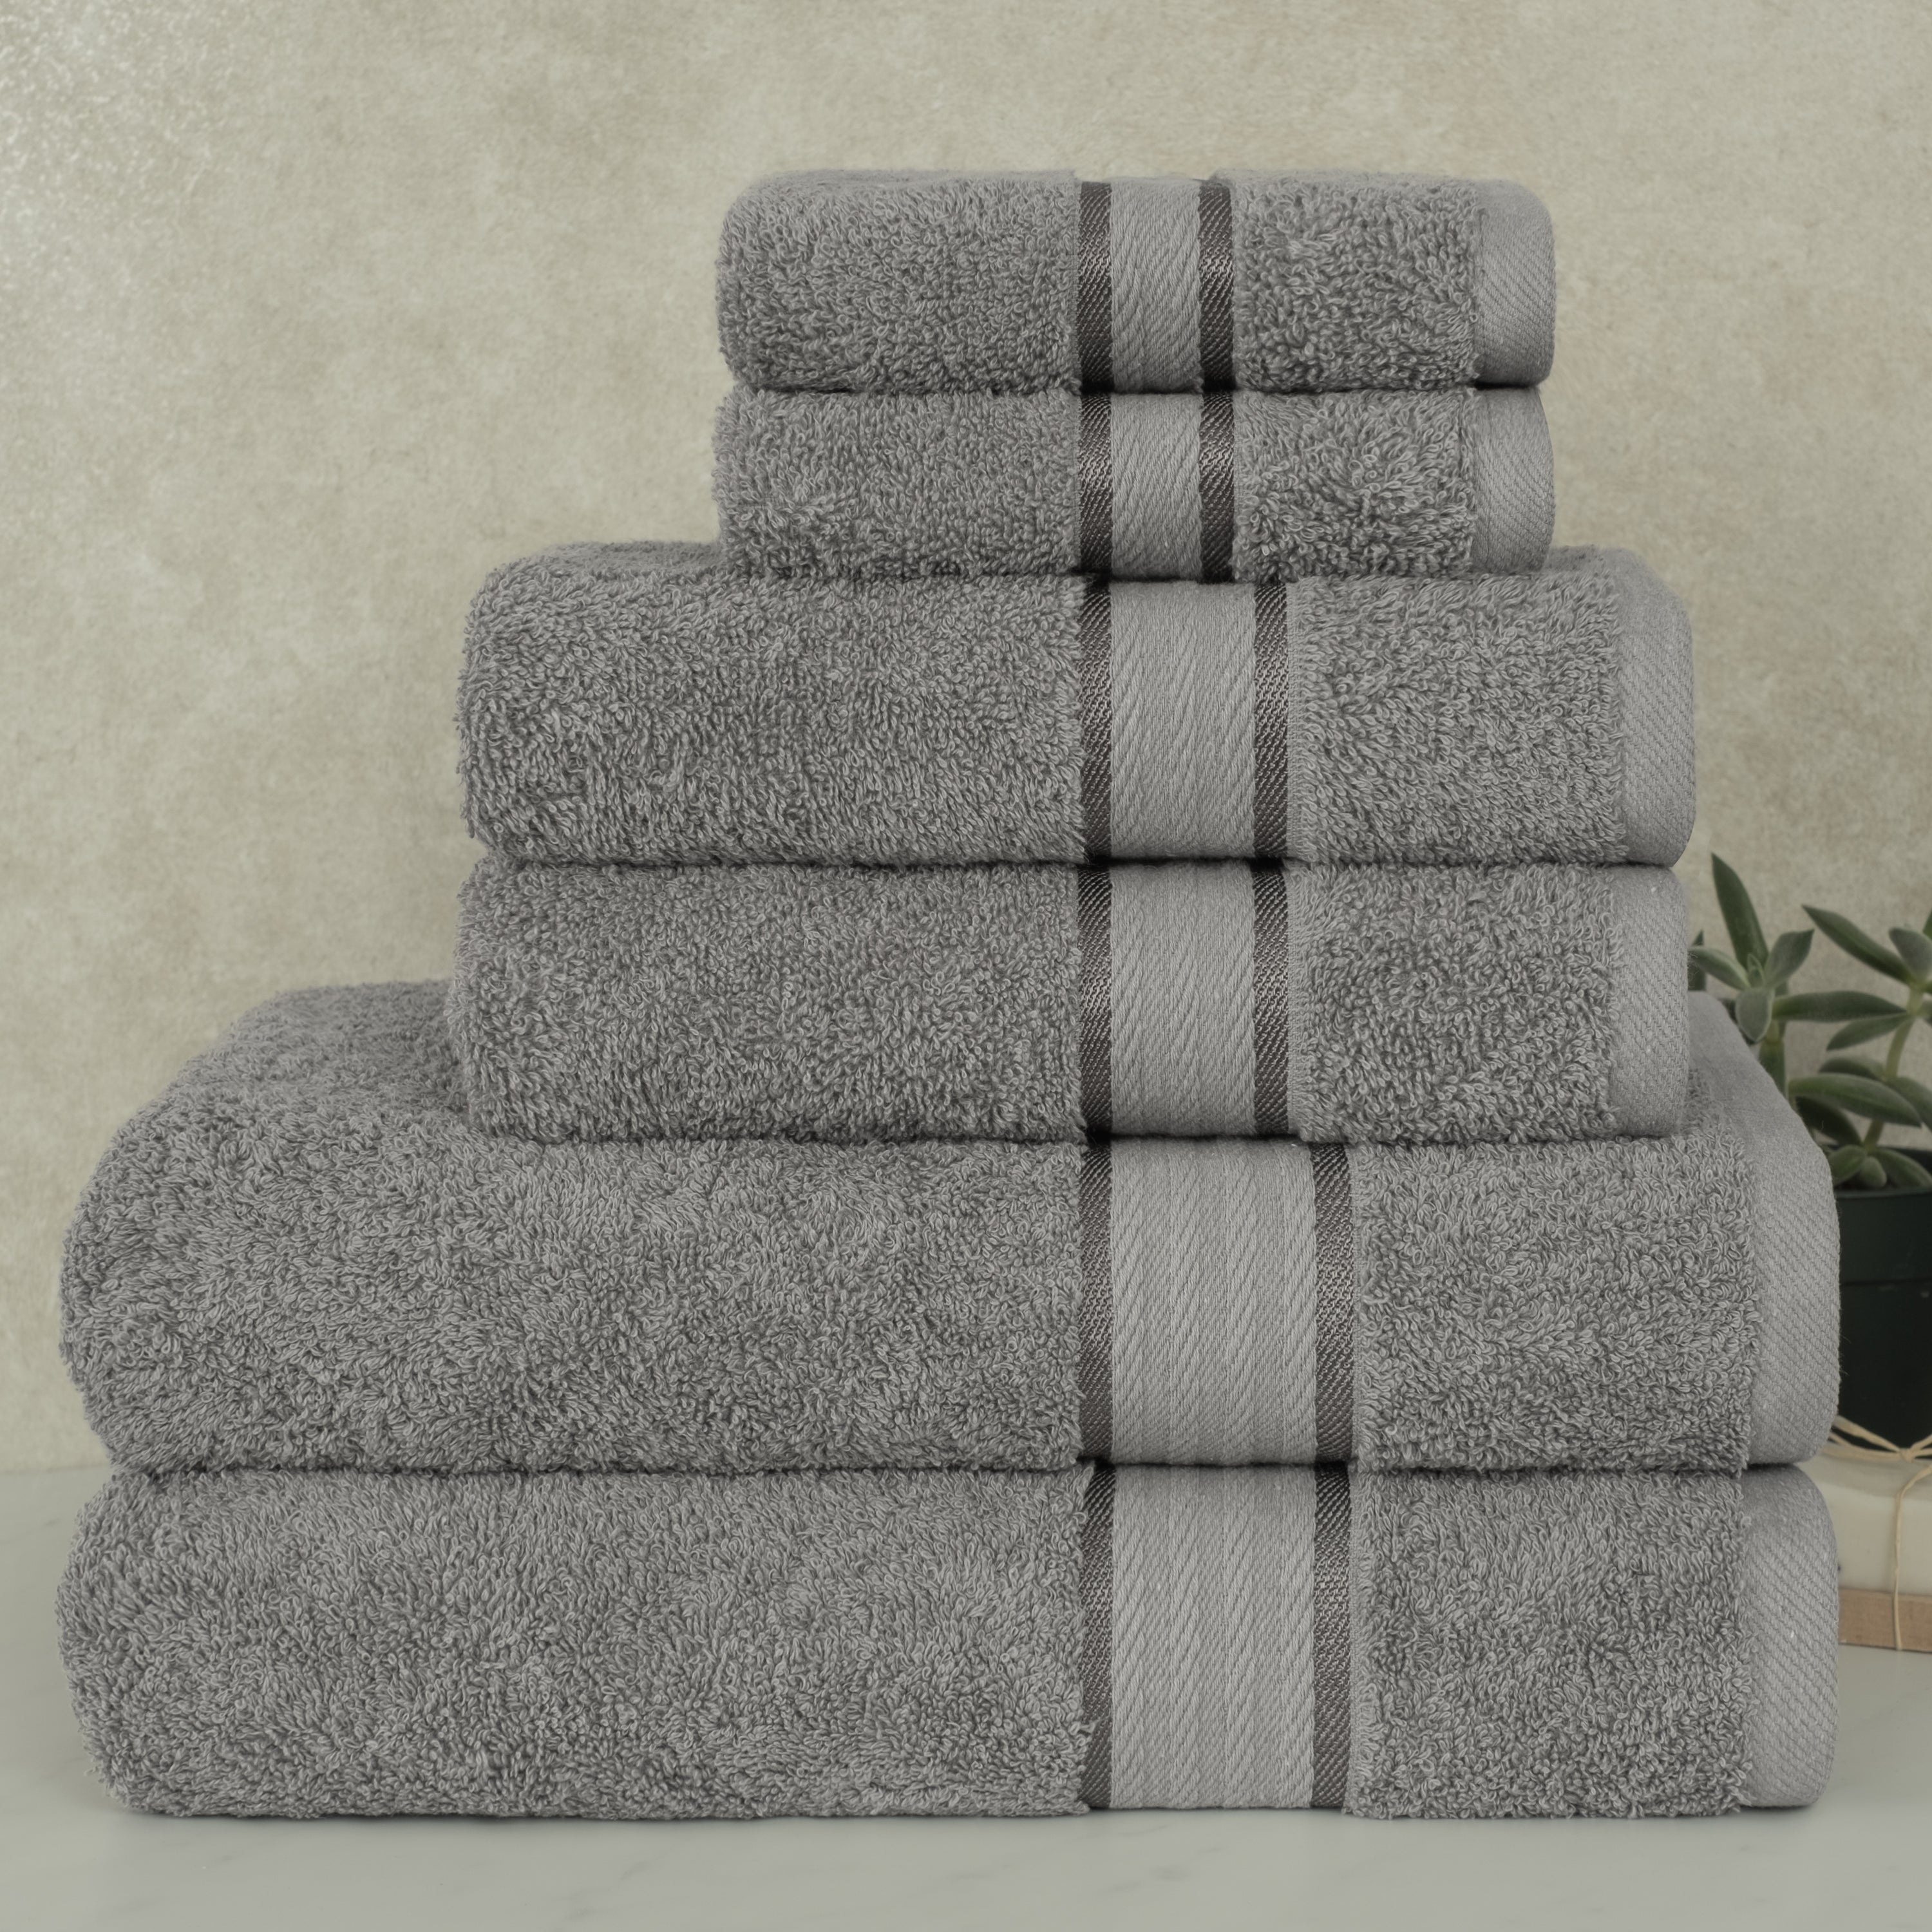 American Soft Linen - Salem 6 Piece Turkish Cotton Luxury Towel Set - Gray - 5